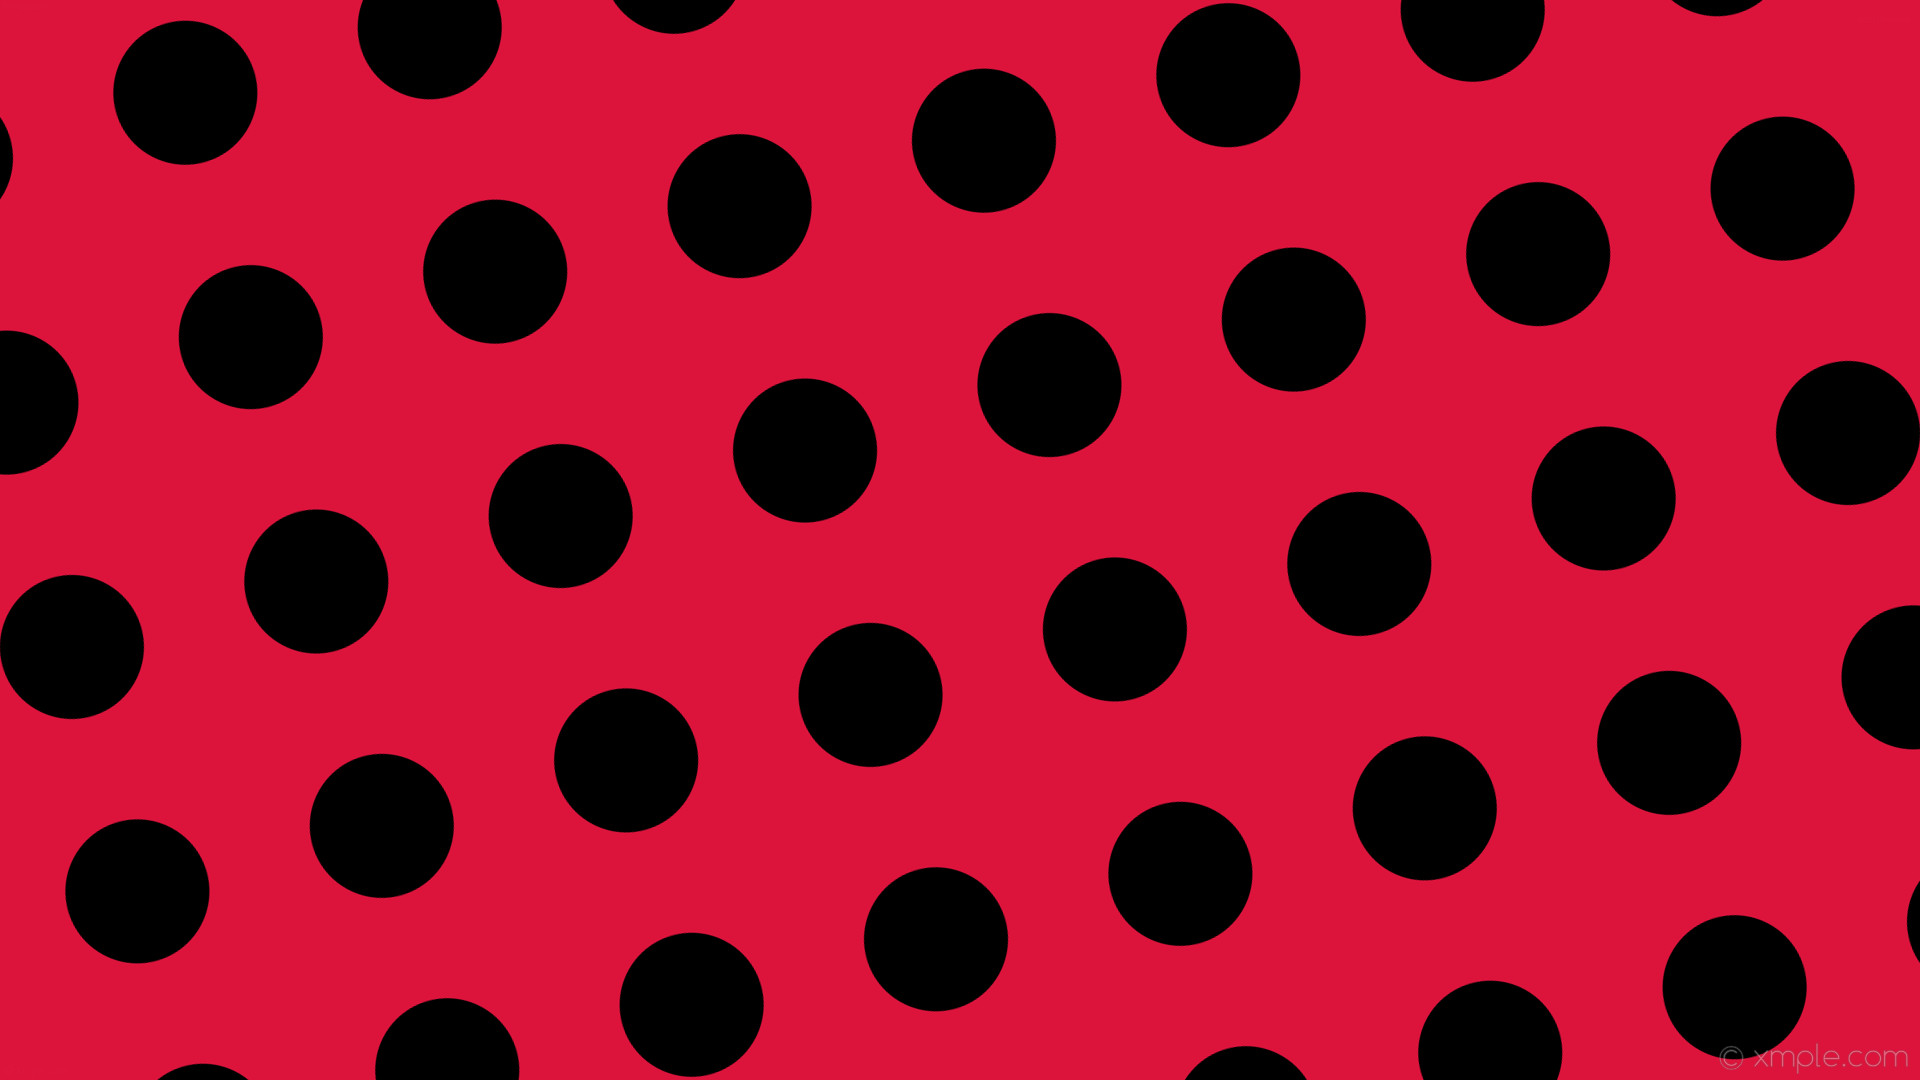 1920x1080 wallpaper dots red polka black spots crimson #dc143c #000000 15Â° 144px 253px